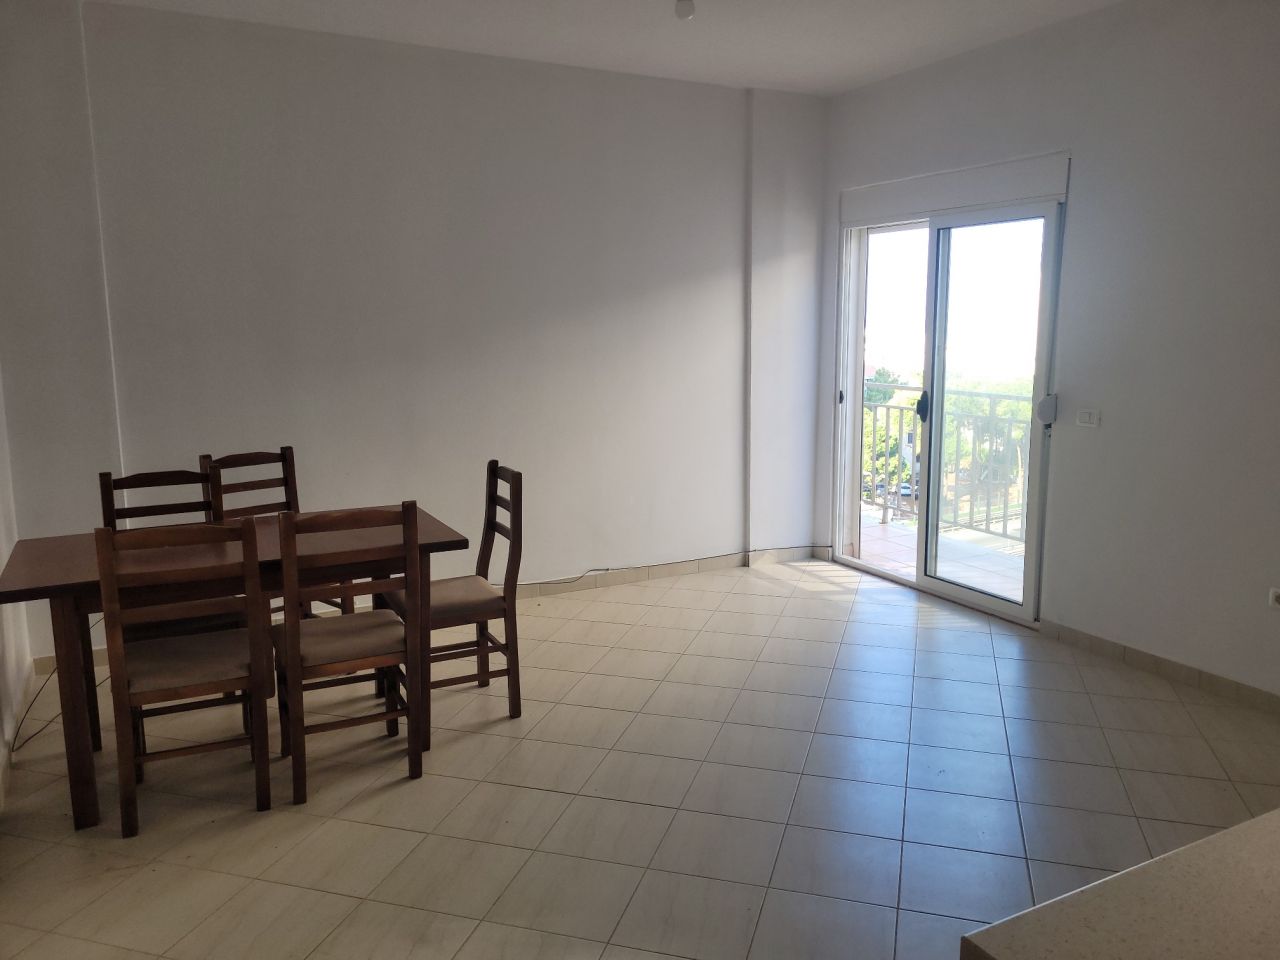 Apartament Per Shitje Ne Durres Shqiperi, I Pozicionuar Ne Nje Zone Te Qete, Prane Plazhit